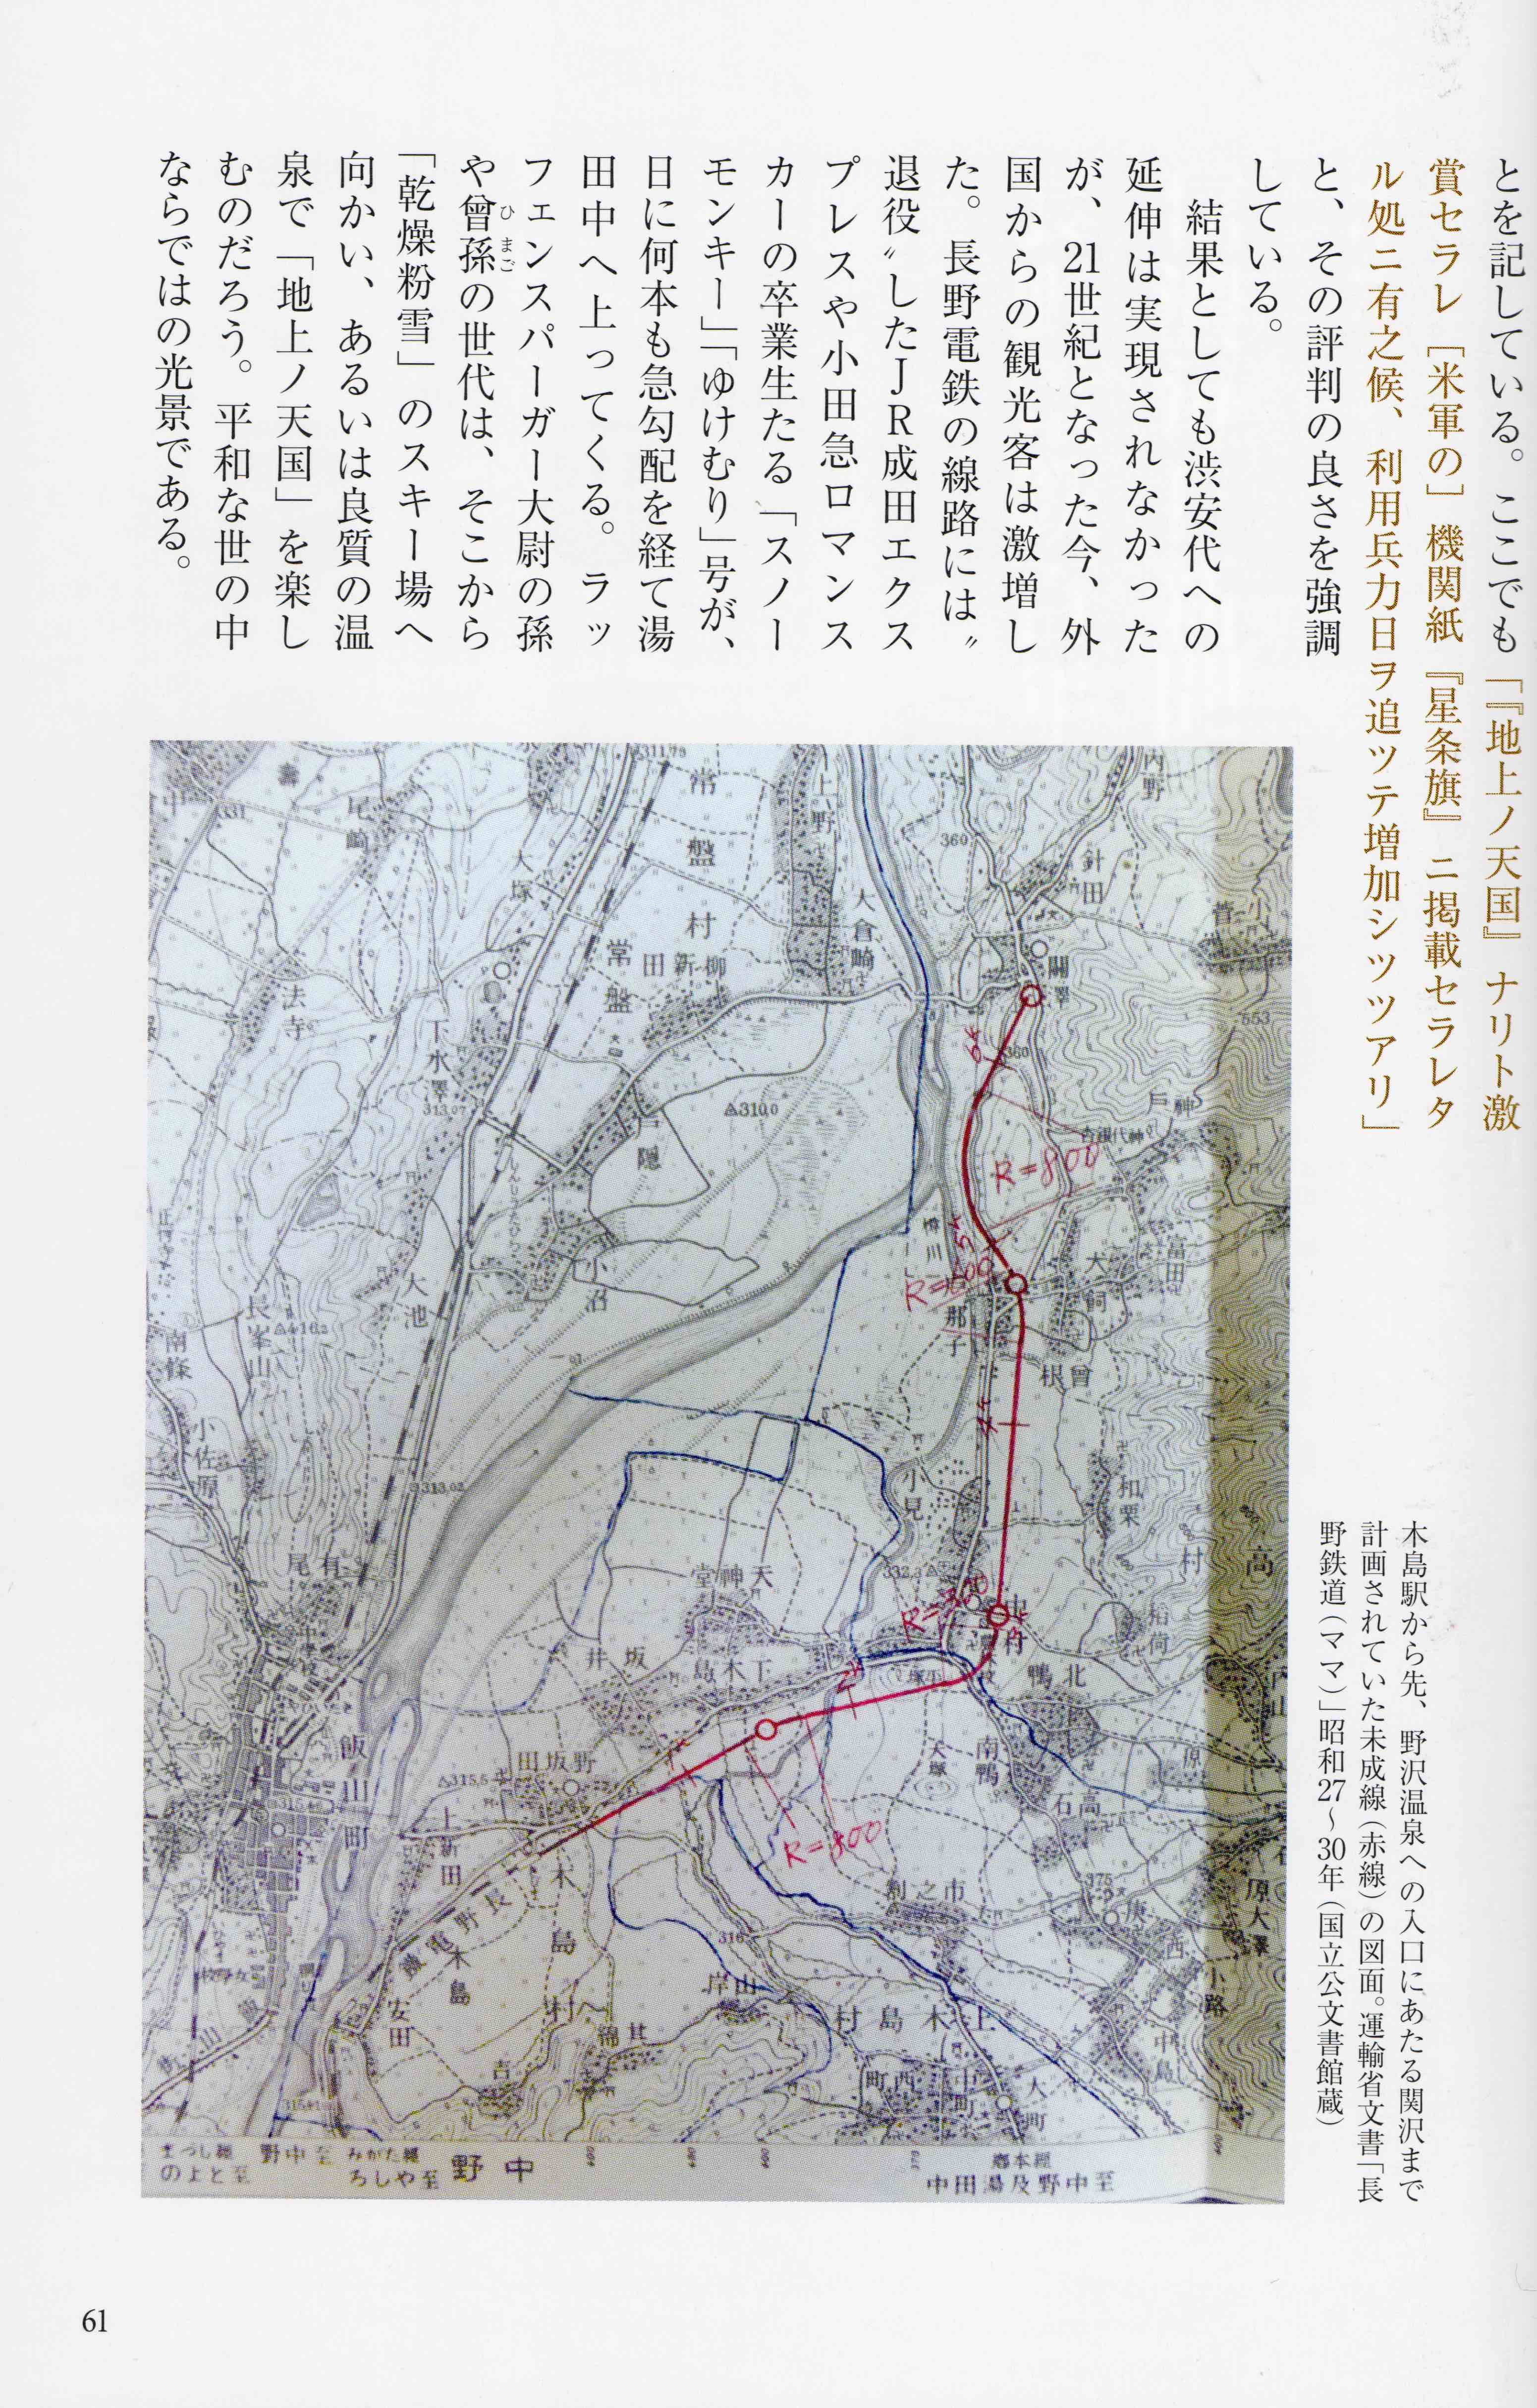 Re: 長野電鉄河東線幻の区間 (画像サイズ: 3102×4860 1.2MB)